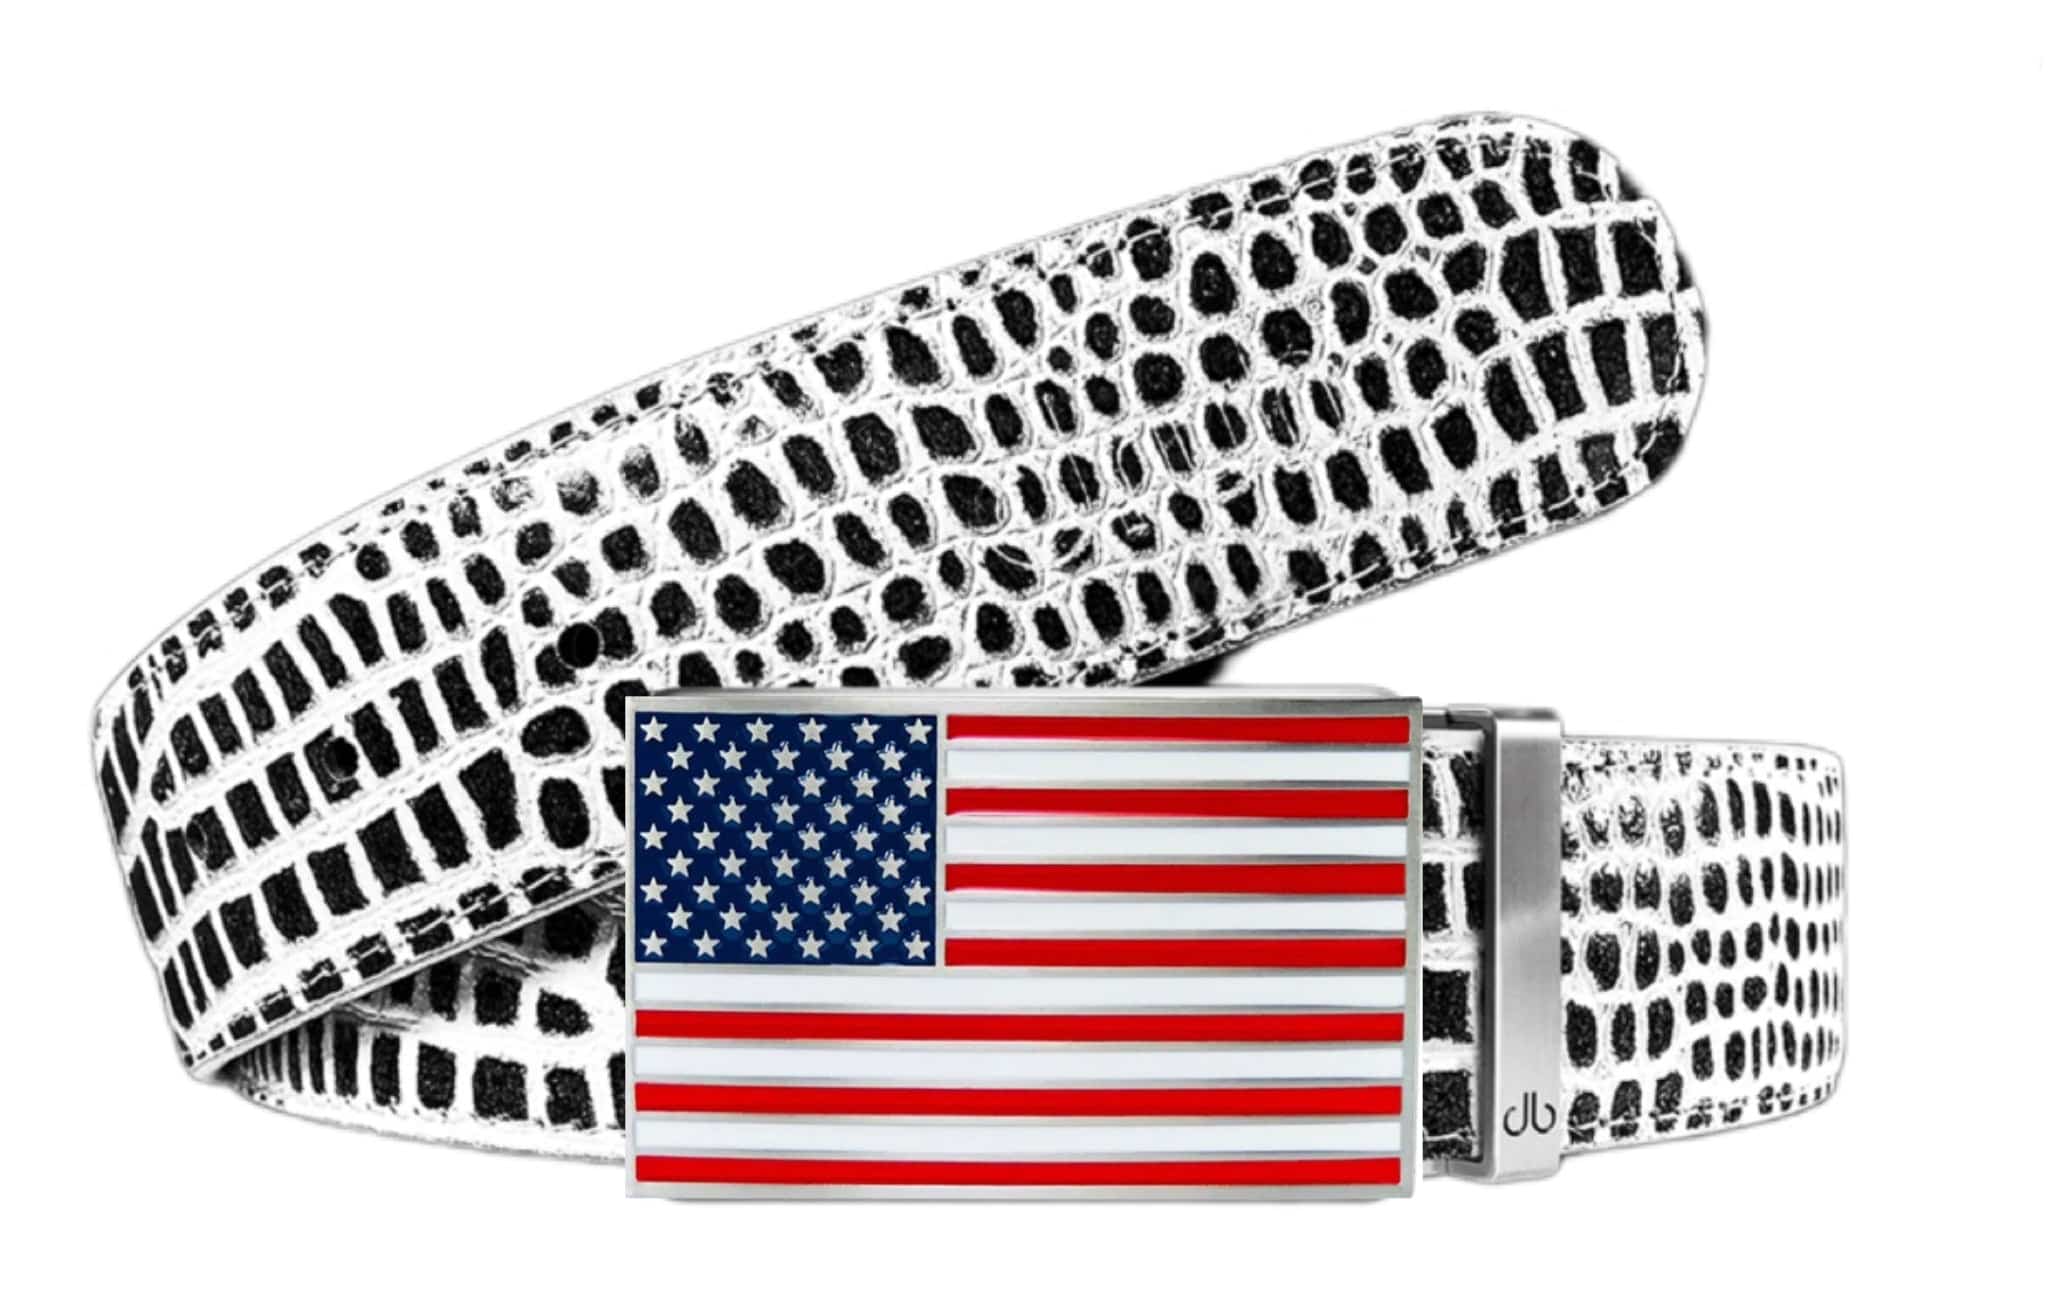 Black & White / American Crocodile Leather Belts Druh Belts USA